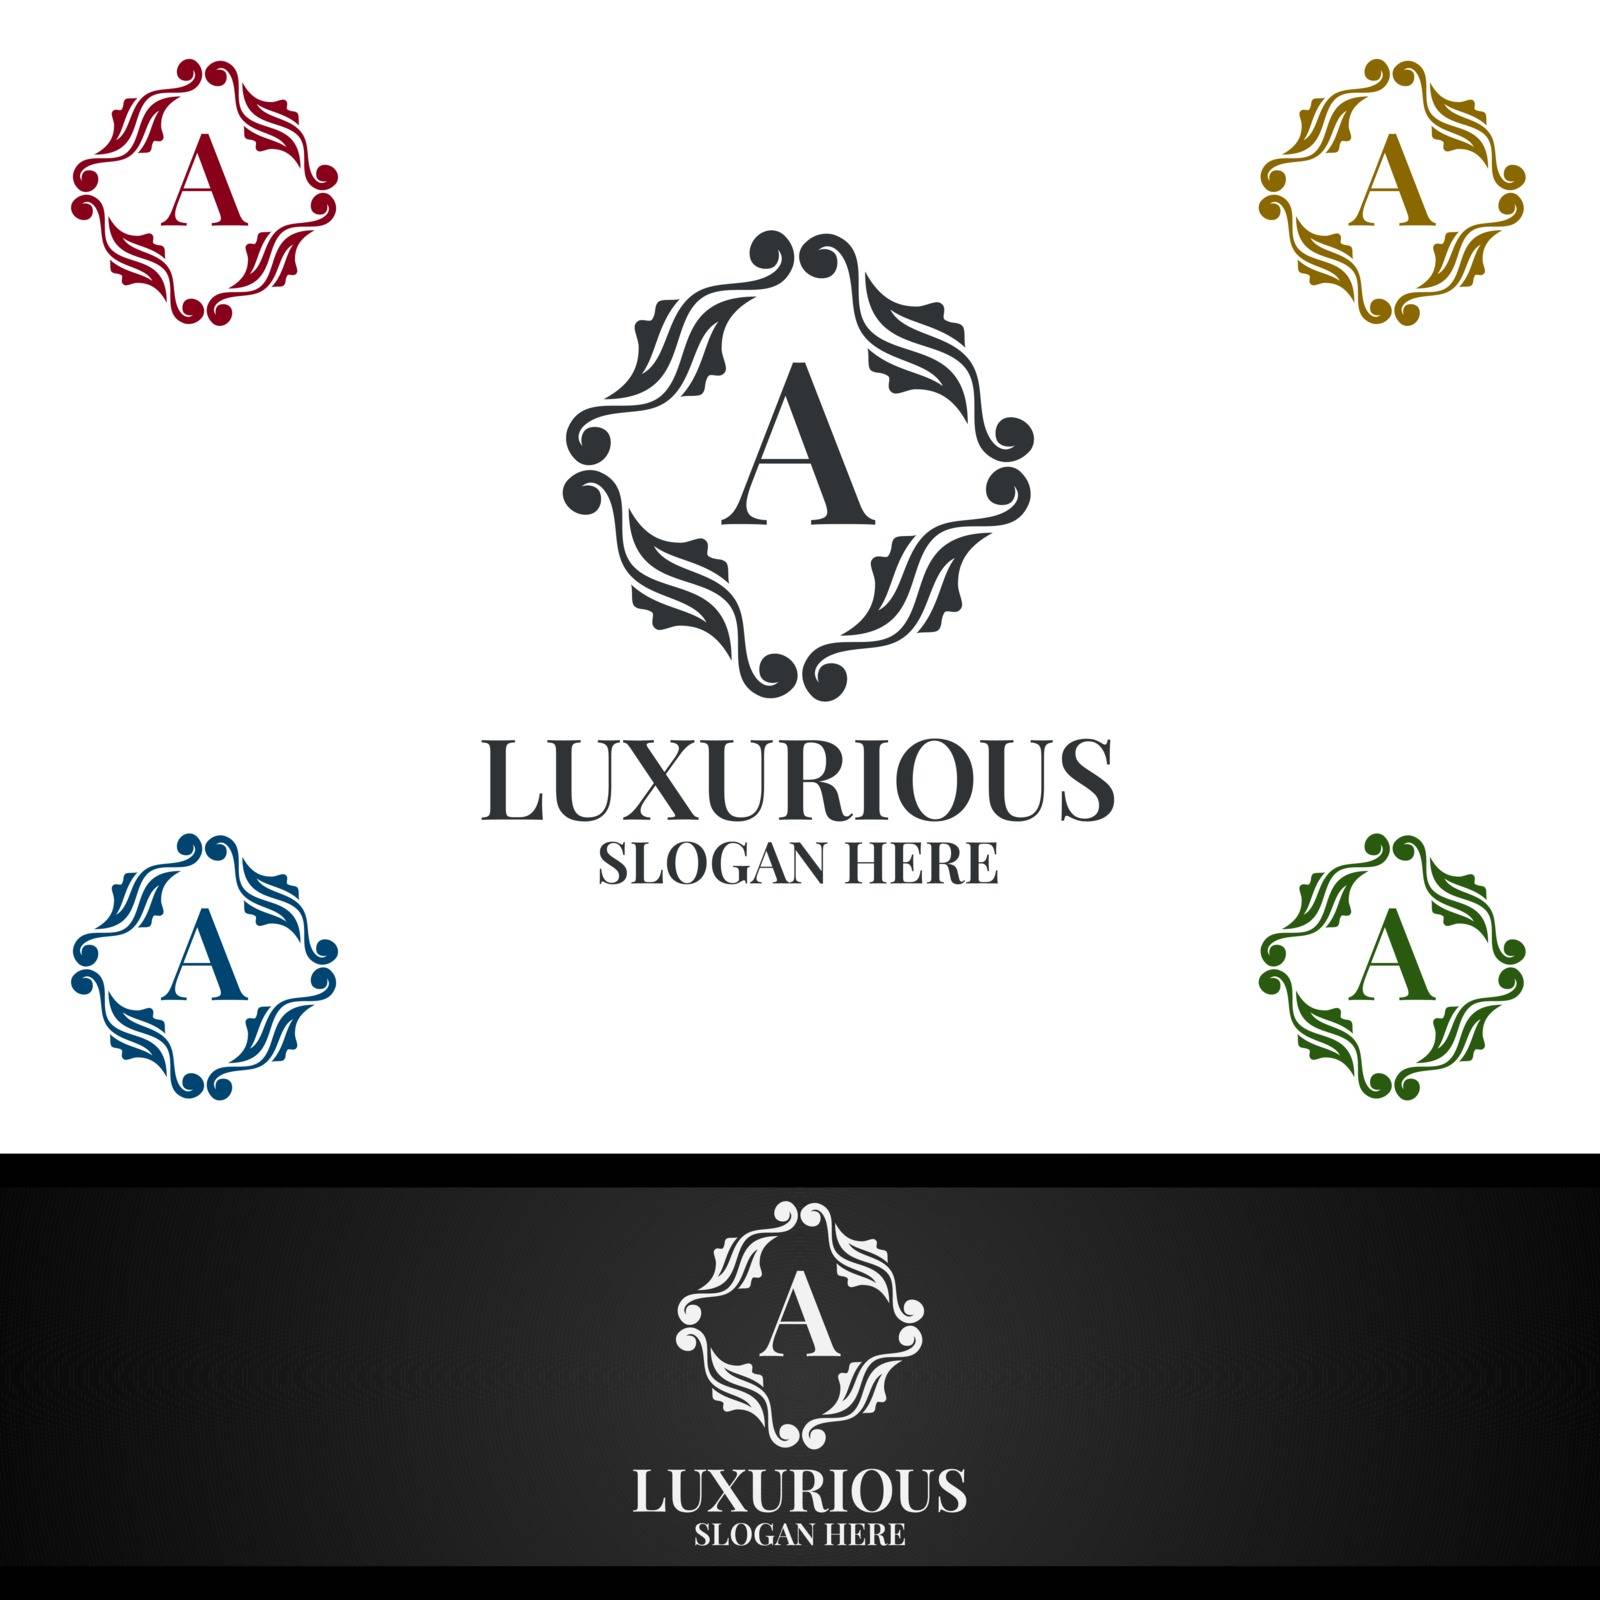 Luxurious Royal Logo for Jewelry, Wedding, Hotel or Fashion Design